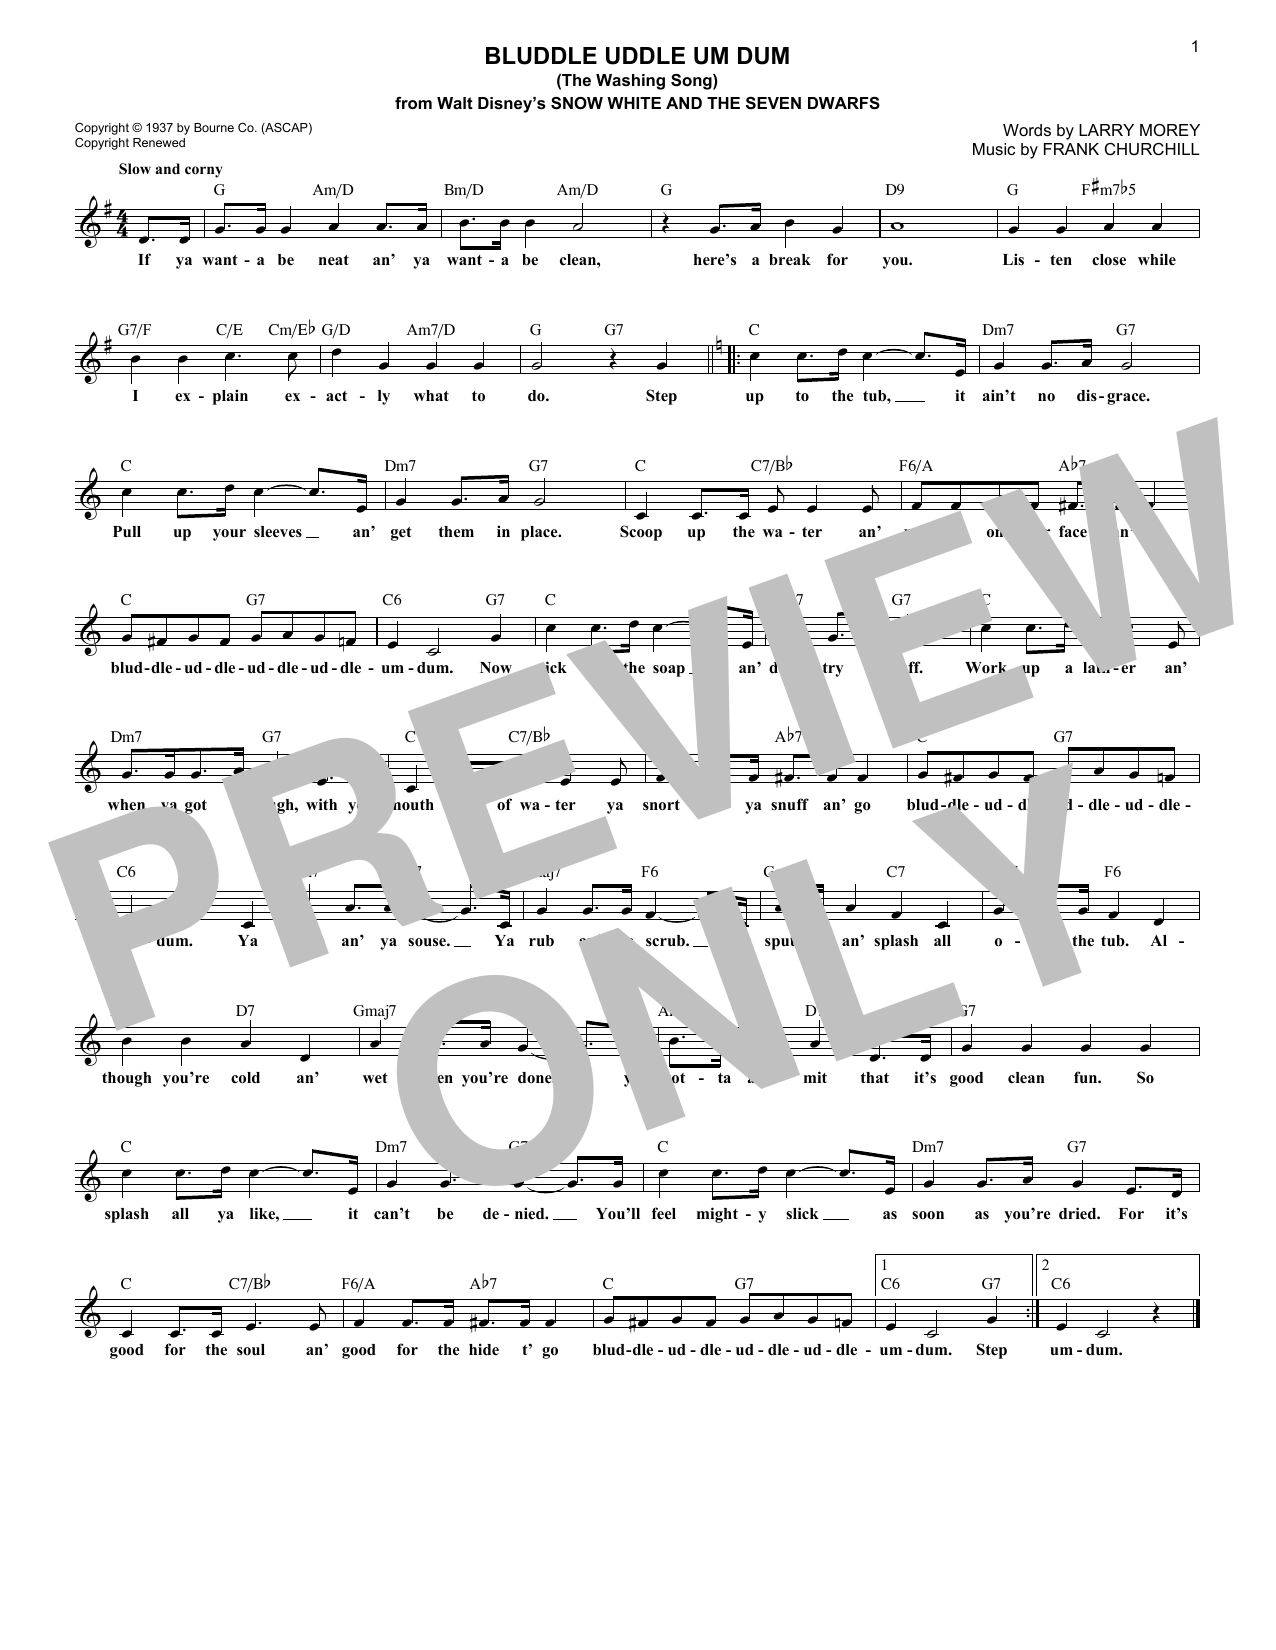 Frank Churchill Bluddle Uddle Um Dum (The Washing Song) Sheet Music Notes & Chords for Melody Line, Lyrics & Chords - Download or Print PDF